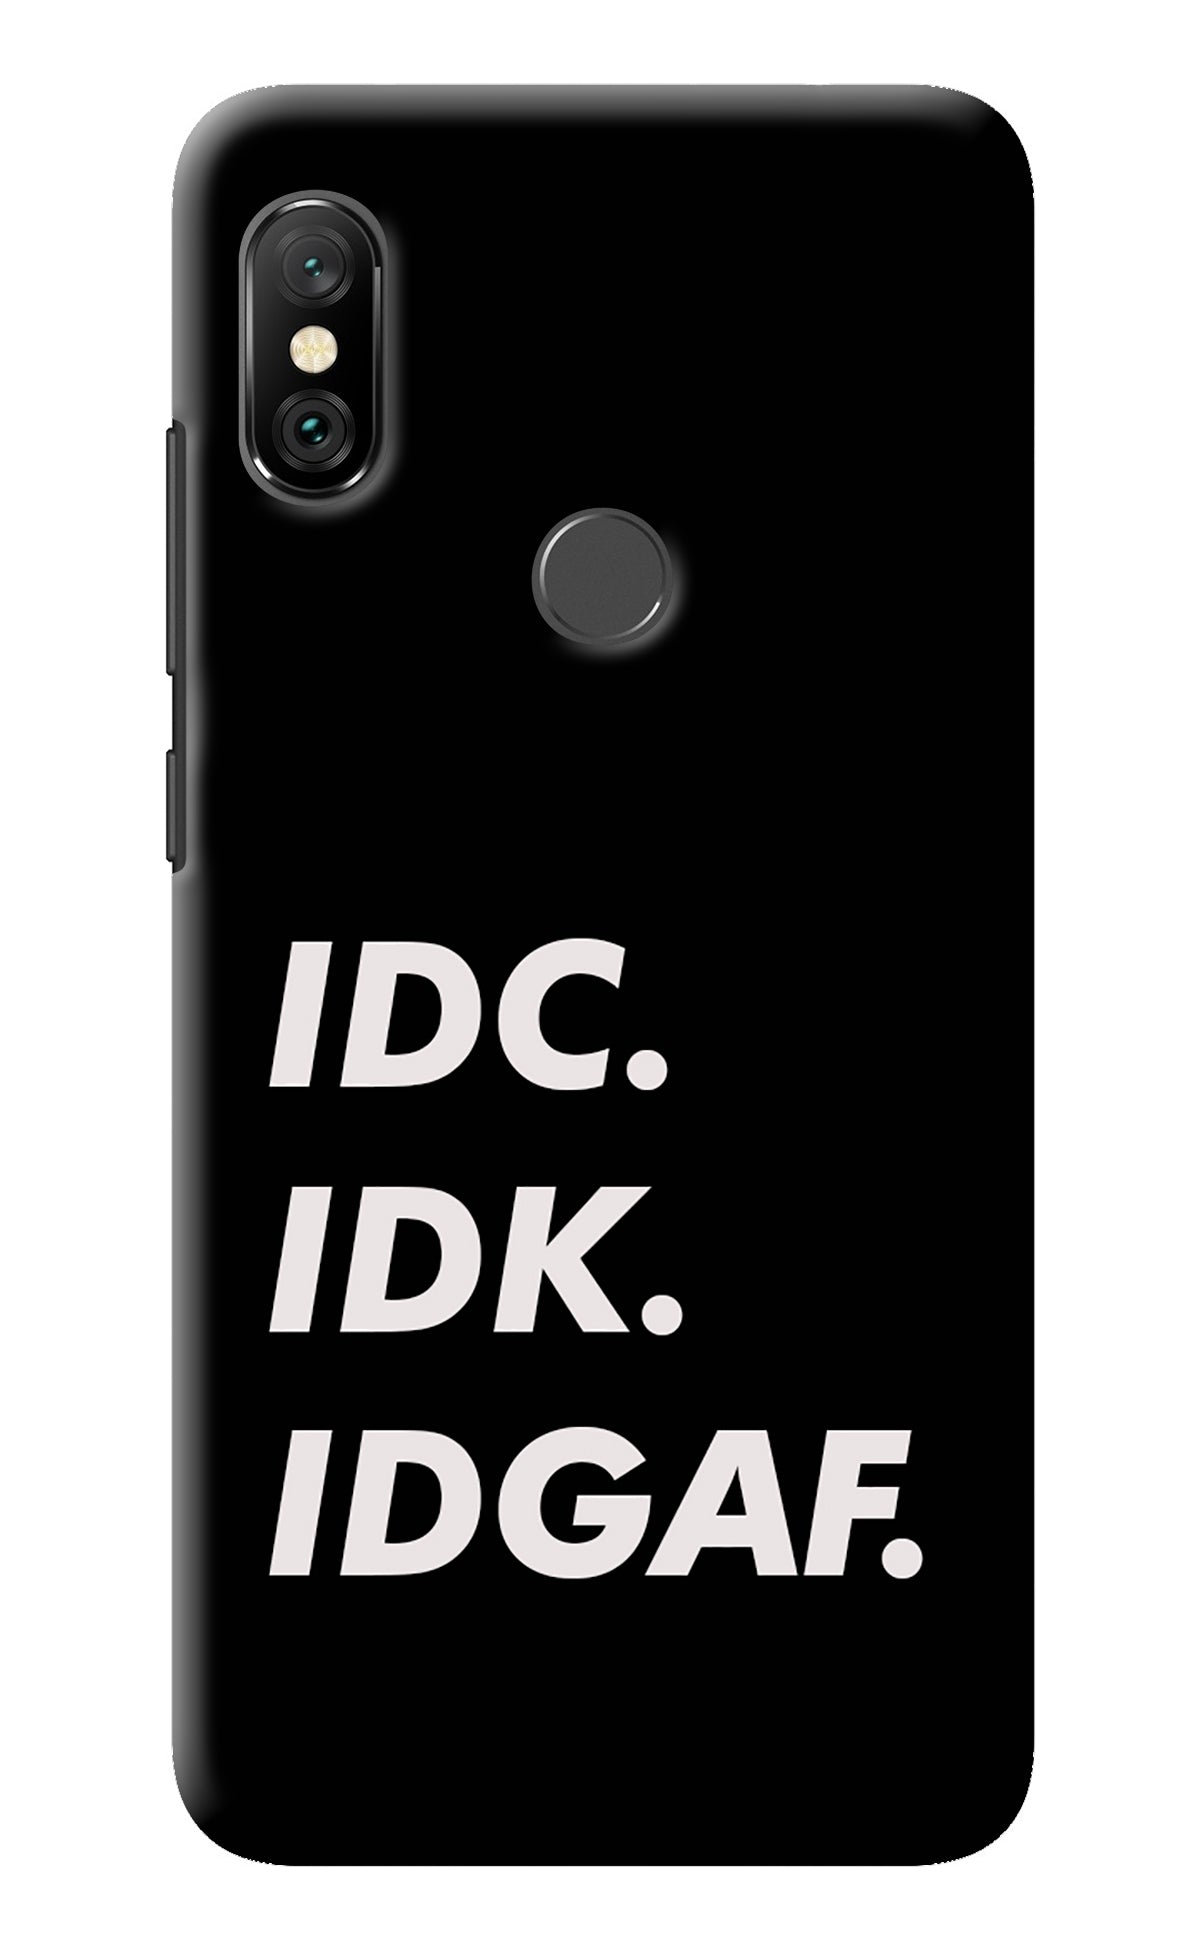 Idc Idk Idgaf Redmi Note 6 Pro Back Cover